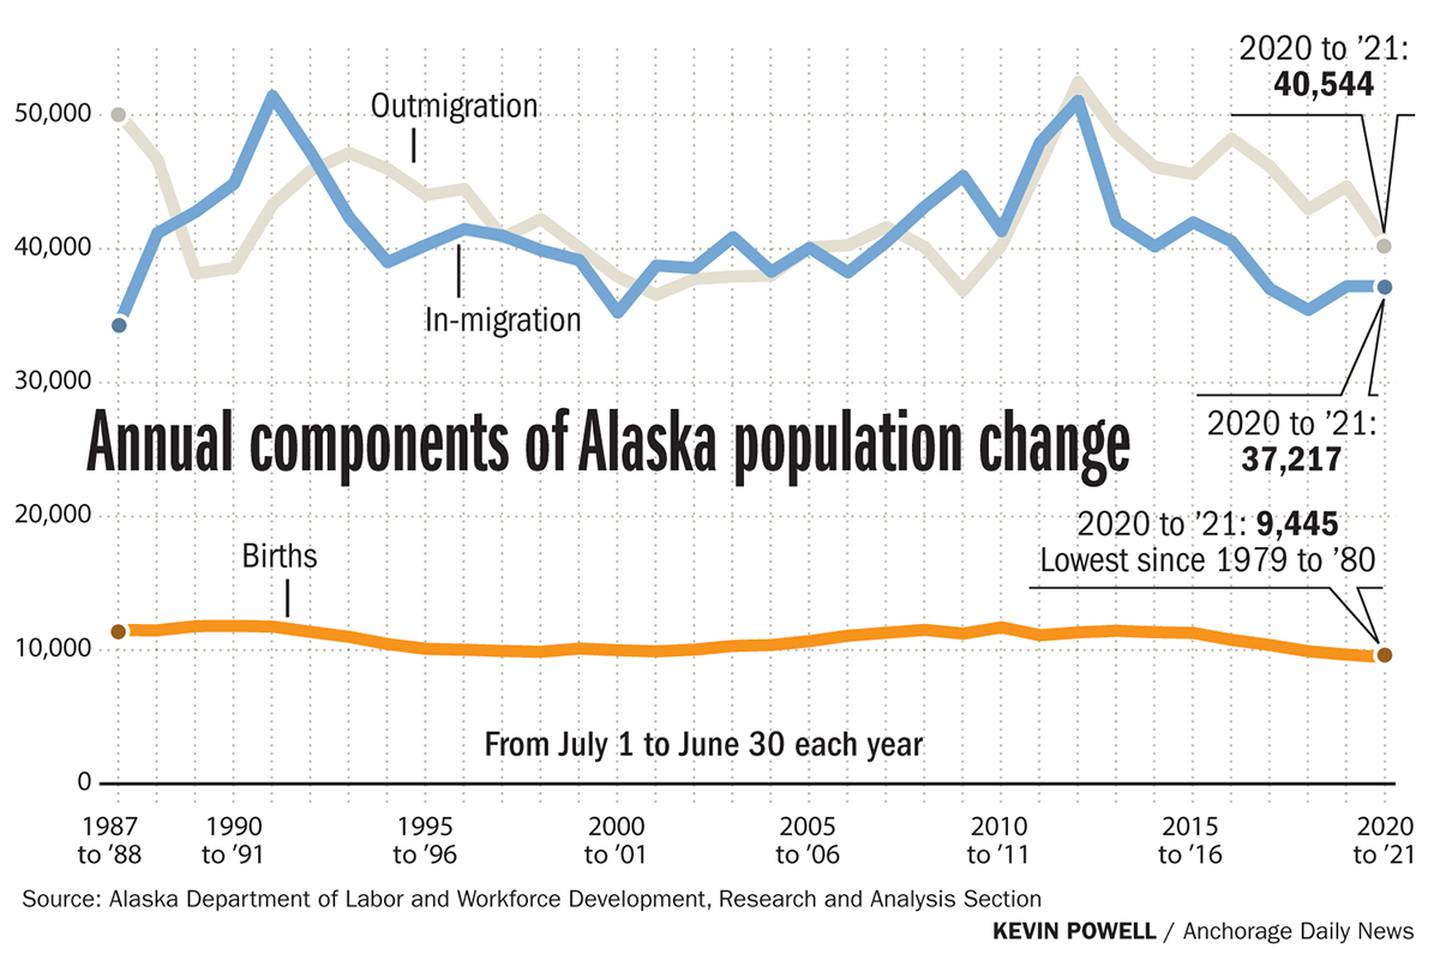 Annual components of Alaska population change